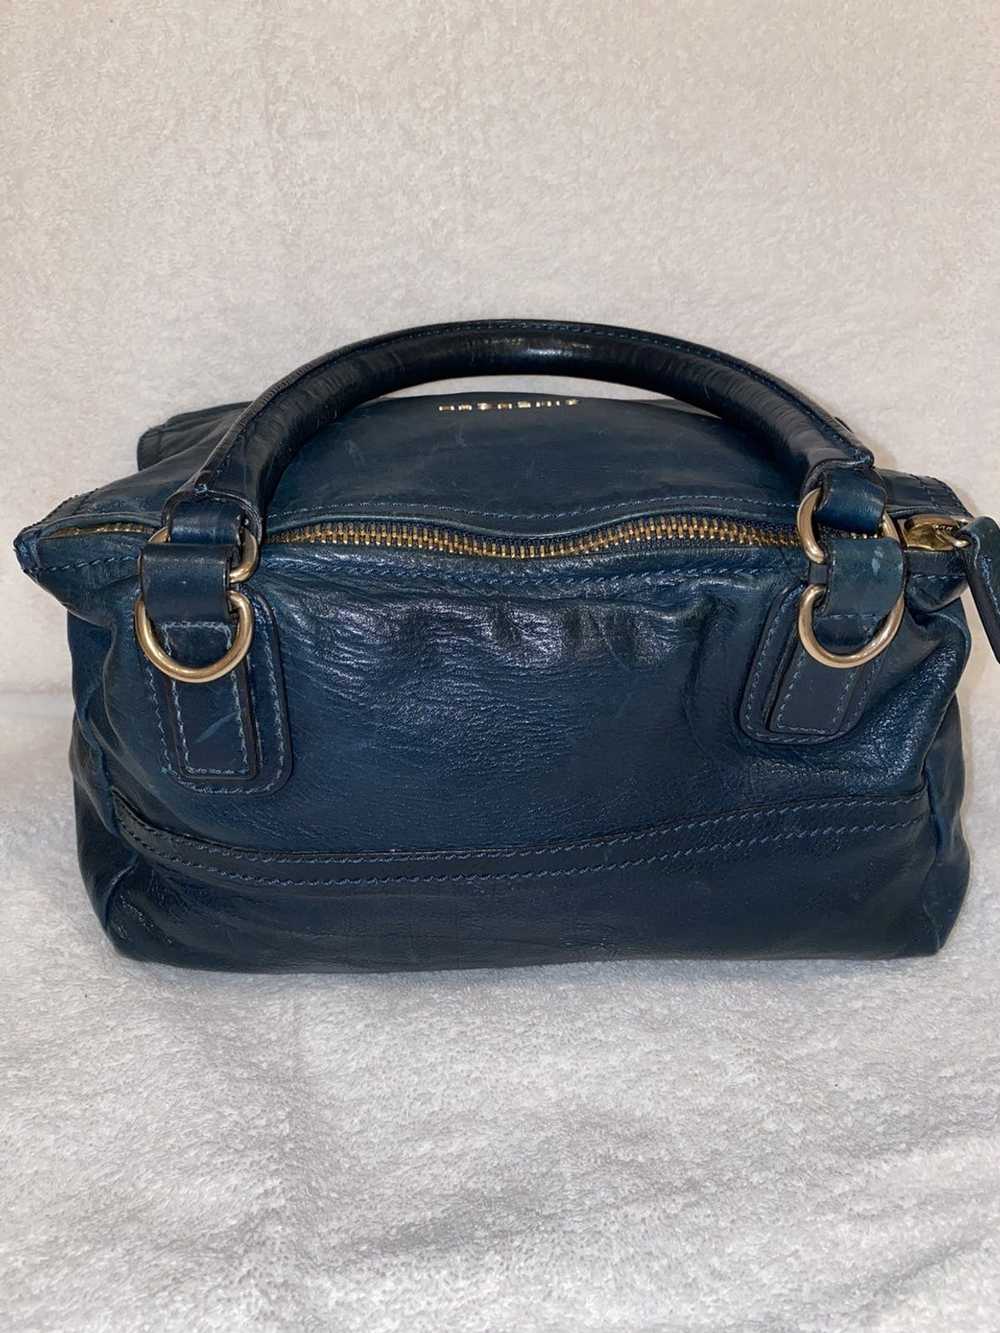 Givenchy Pandora Goatskin Bag - image 3